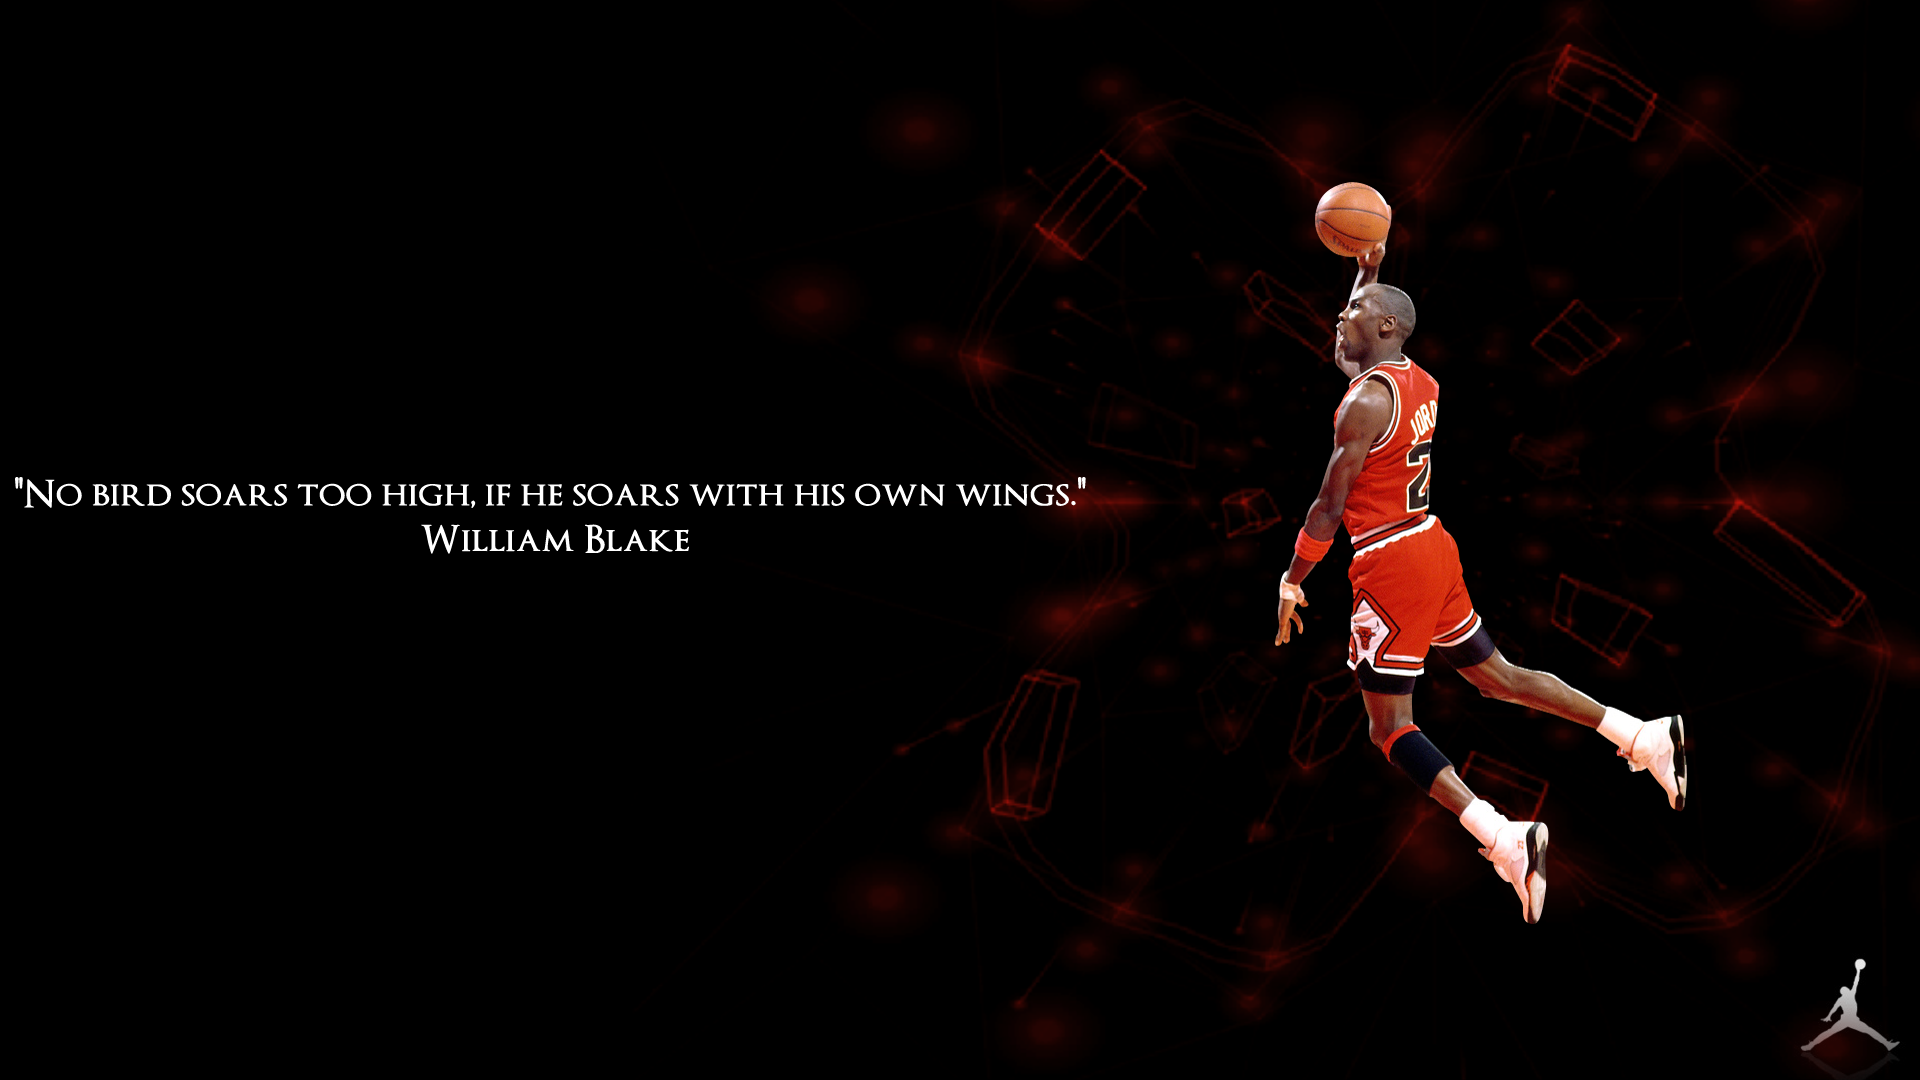 Michael Jordan Quote Backgrounds